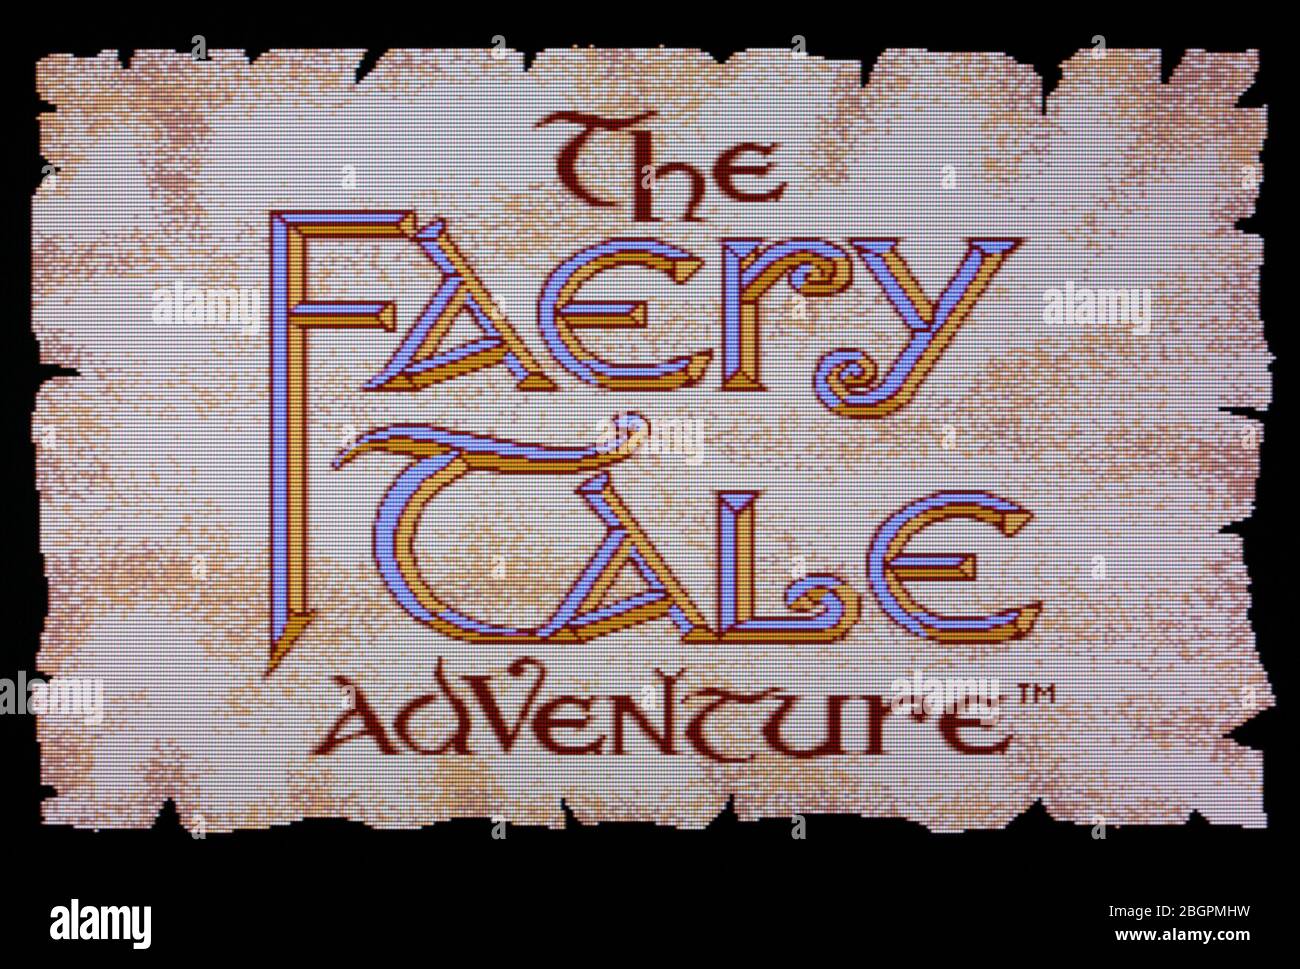 The Faery Tale Adventure - Sega Genesis Mega Drive - Editorial use only Stock Photo